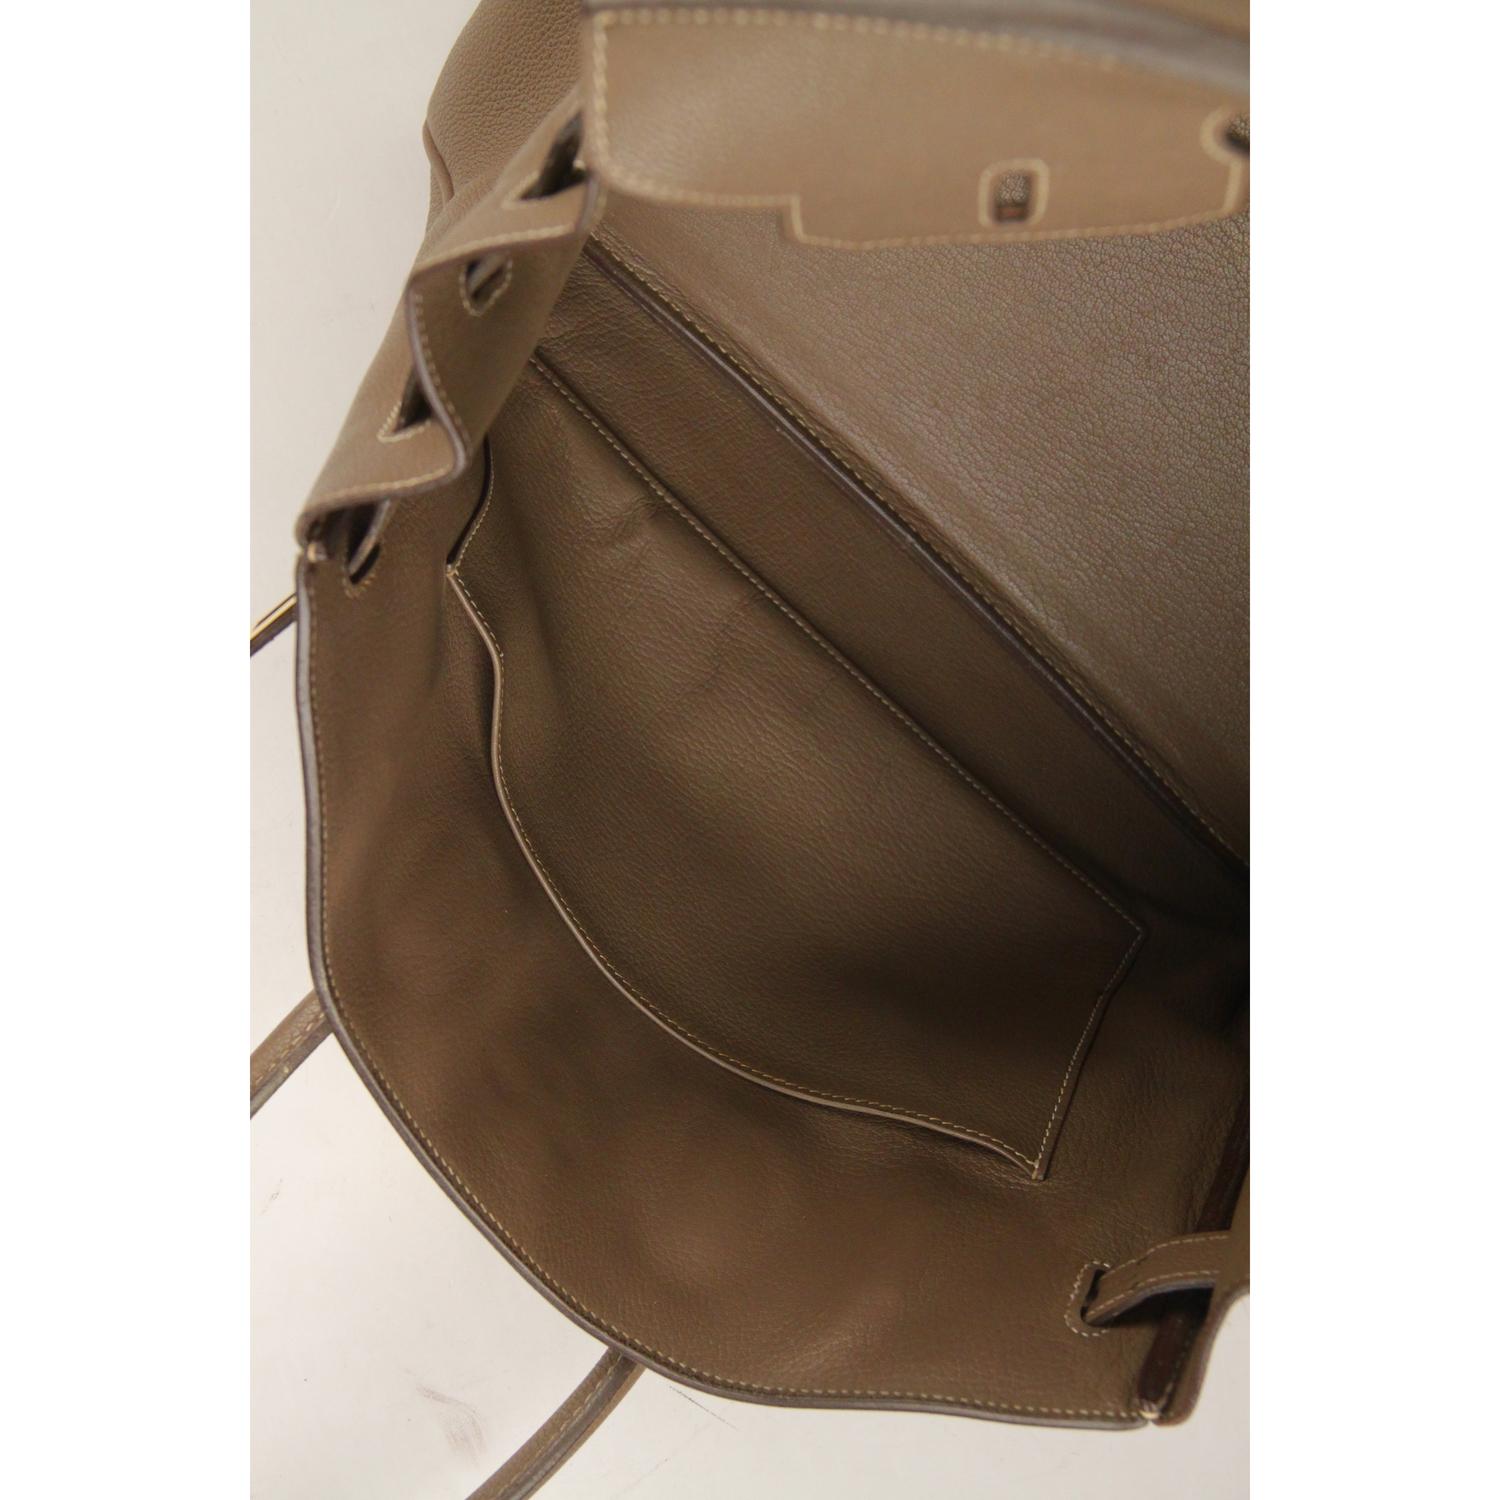 Hermes Taupe Togo Leather Birkin 35 Top Handle Bag Satchel 4